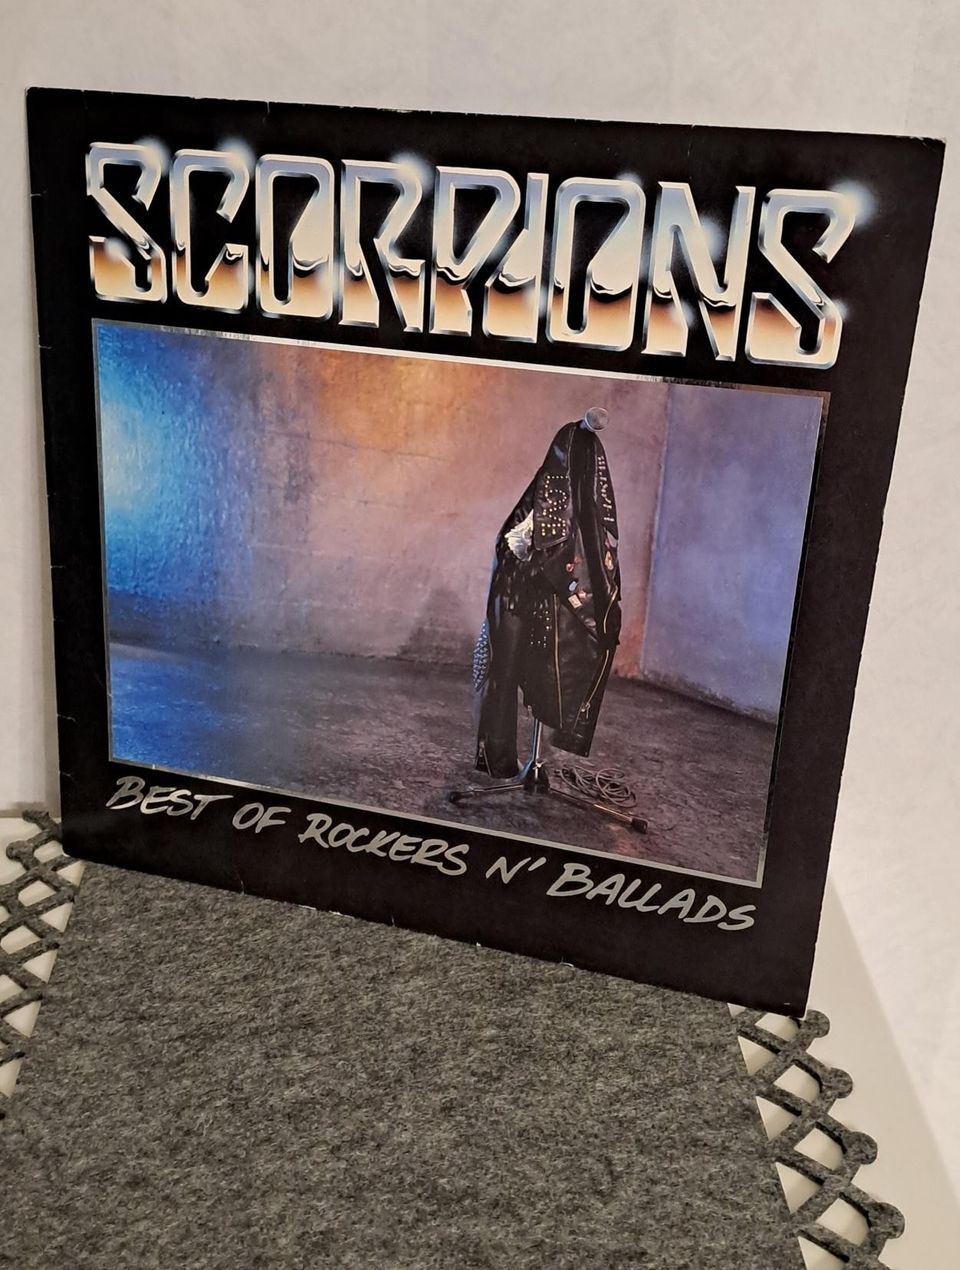 Scorpions Best of rockers n' ballads LP-levy